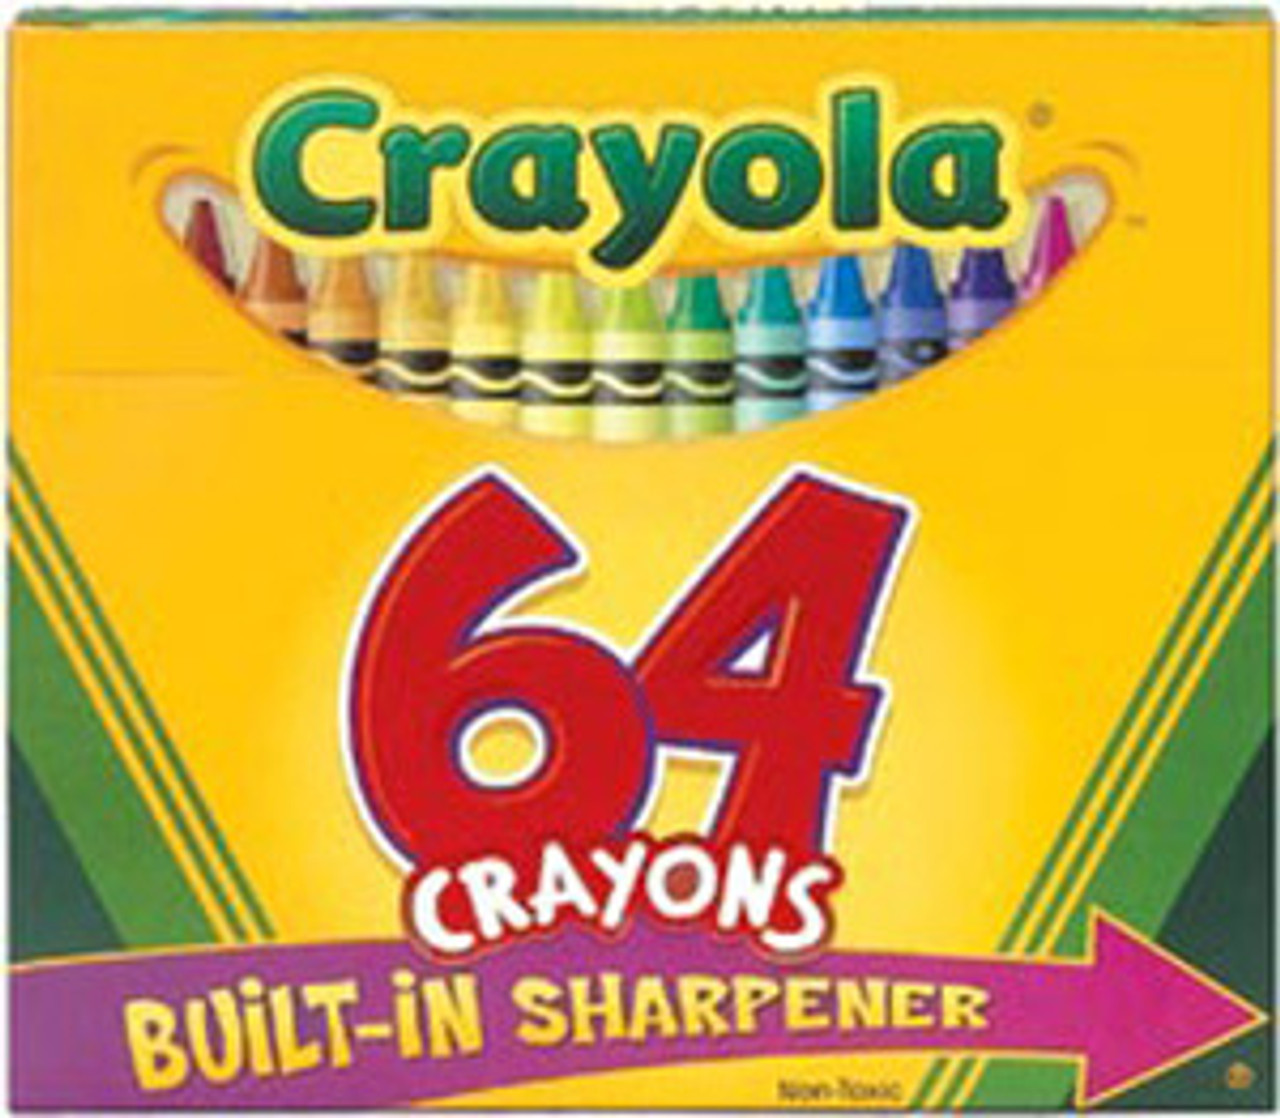 World's Coolest Toys - Crayola Crayons Box Keychain